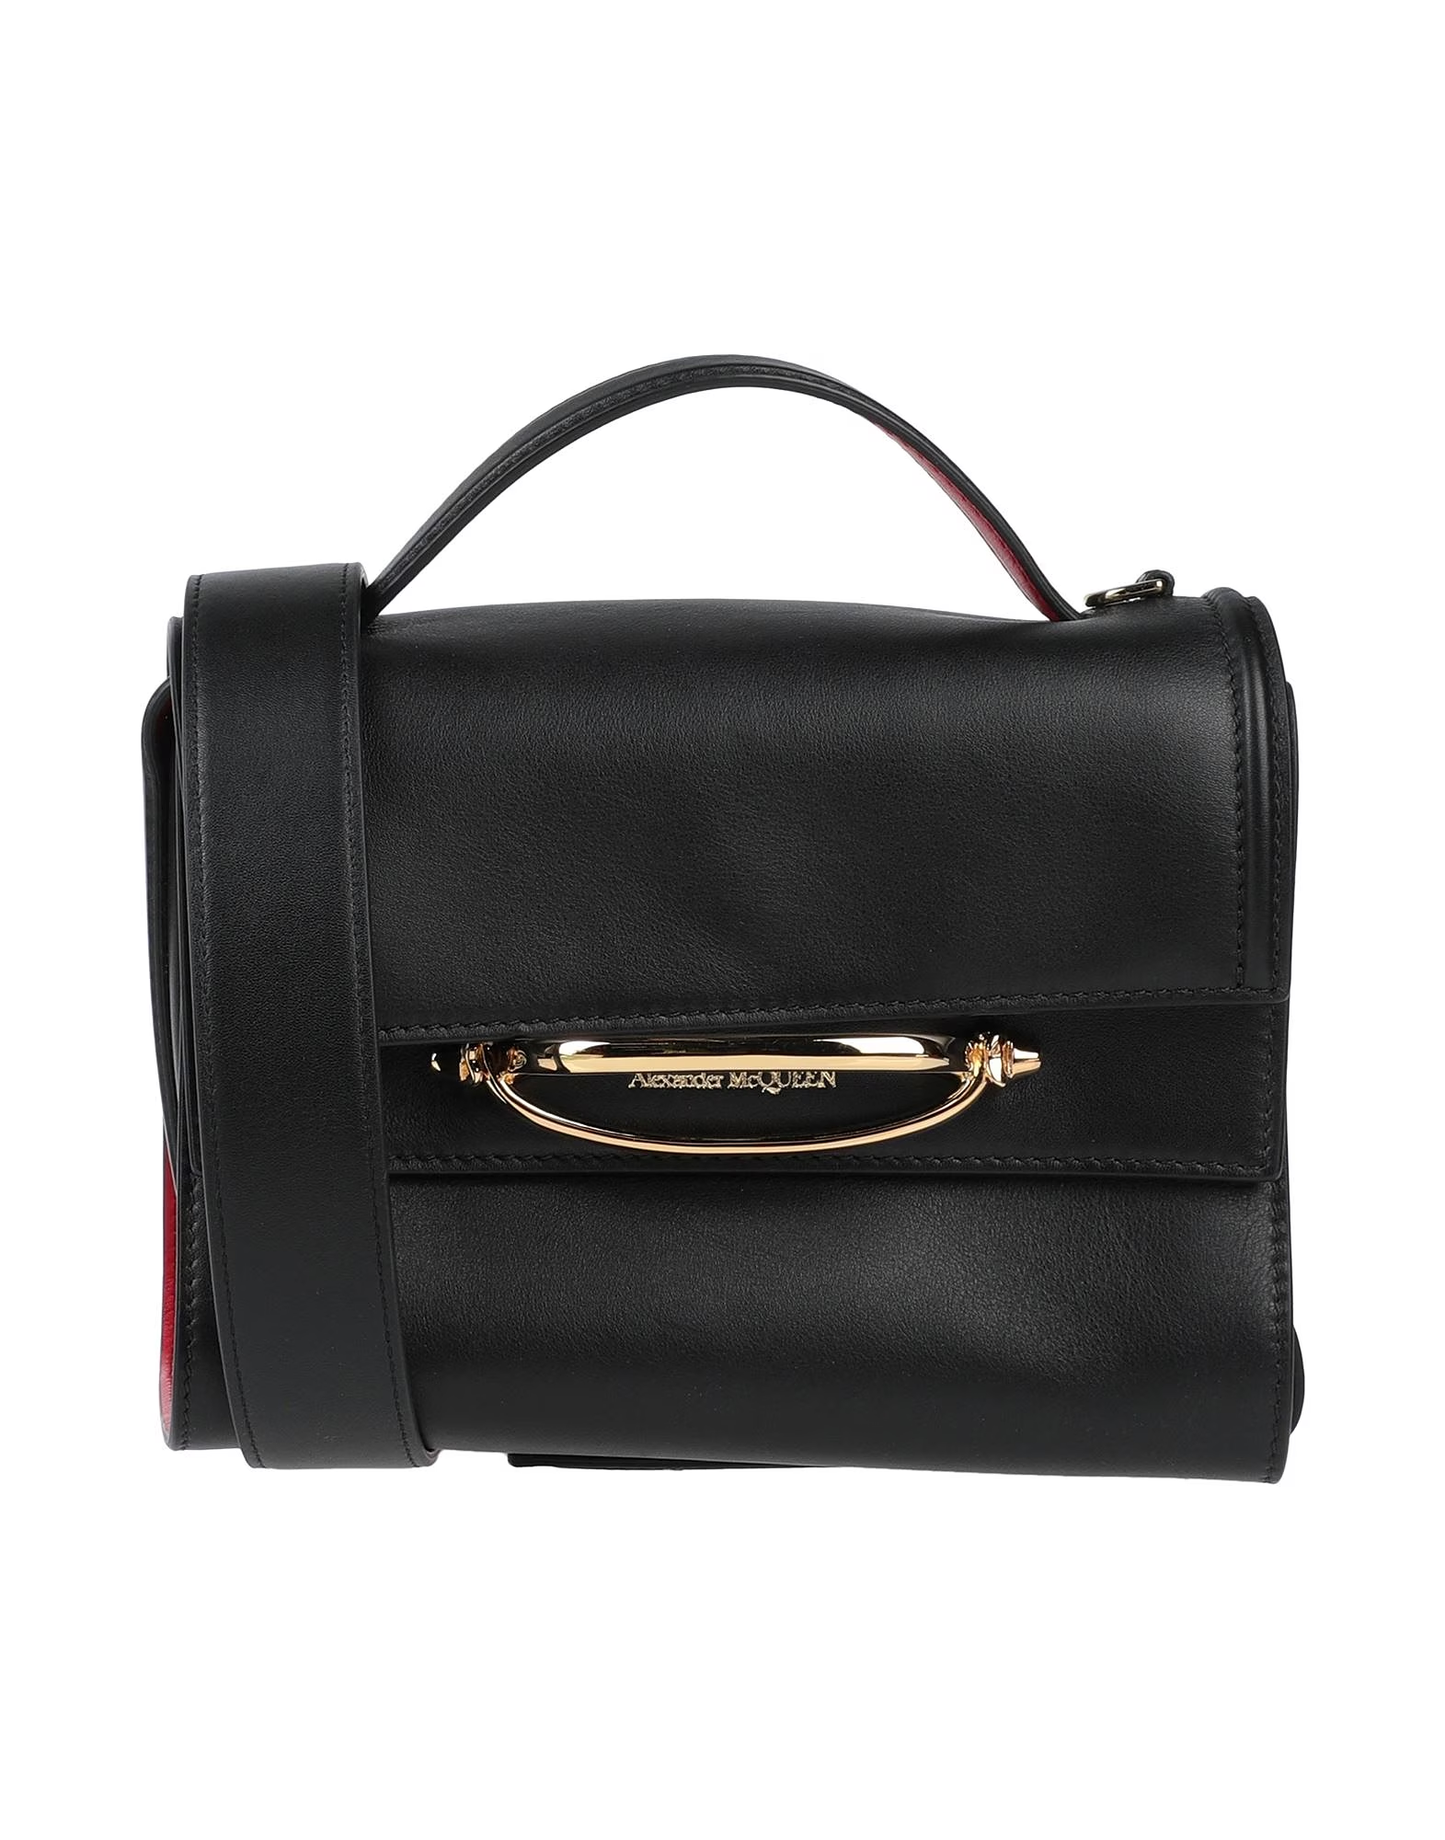 PARIOLI BAGS - Discount Designer Handbags Outlet | ALEXANDER MCQUEEN Handbags